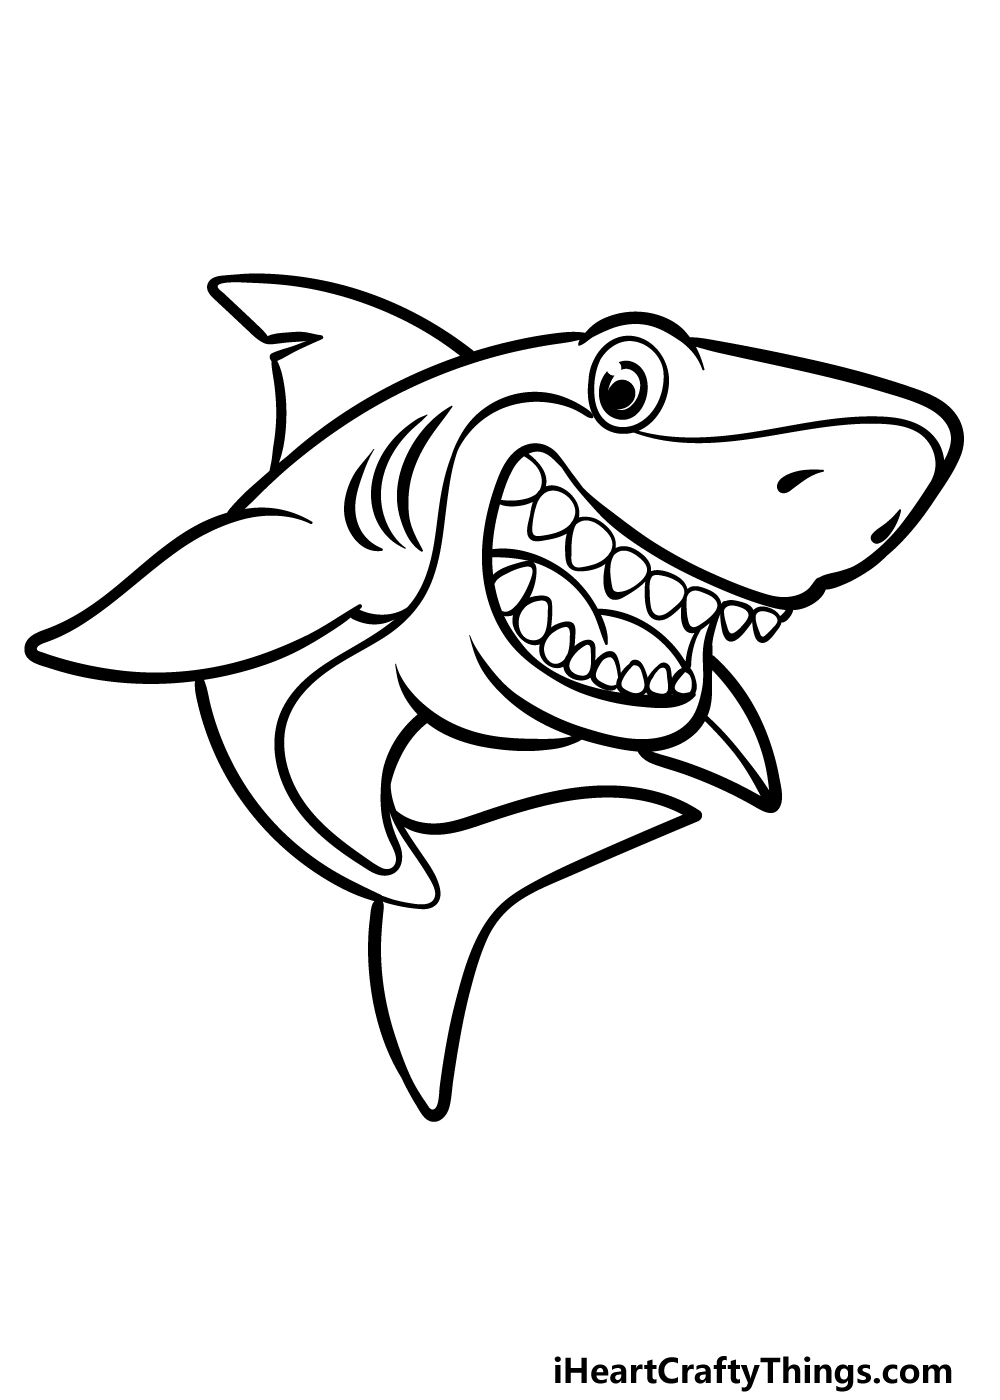 Cartoon Shark Drawing - How To Draw A Cartoon Shark Step By Step